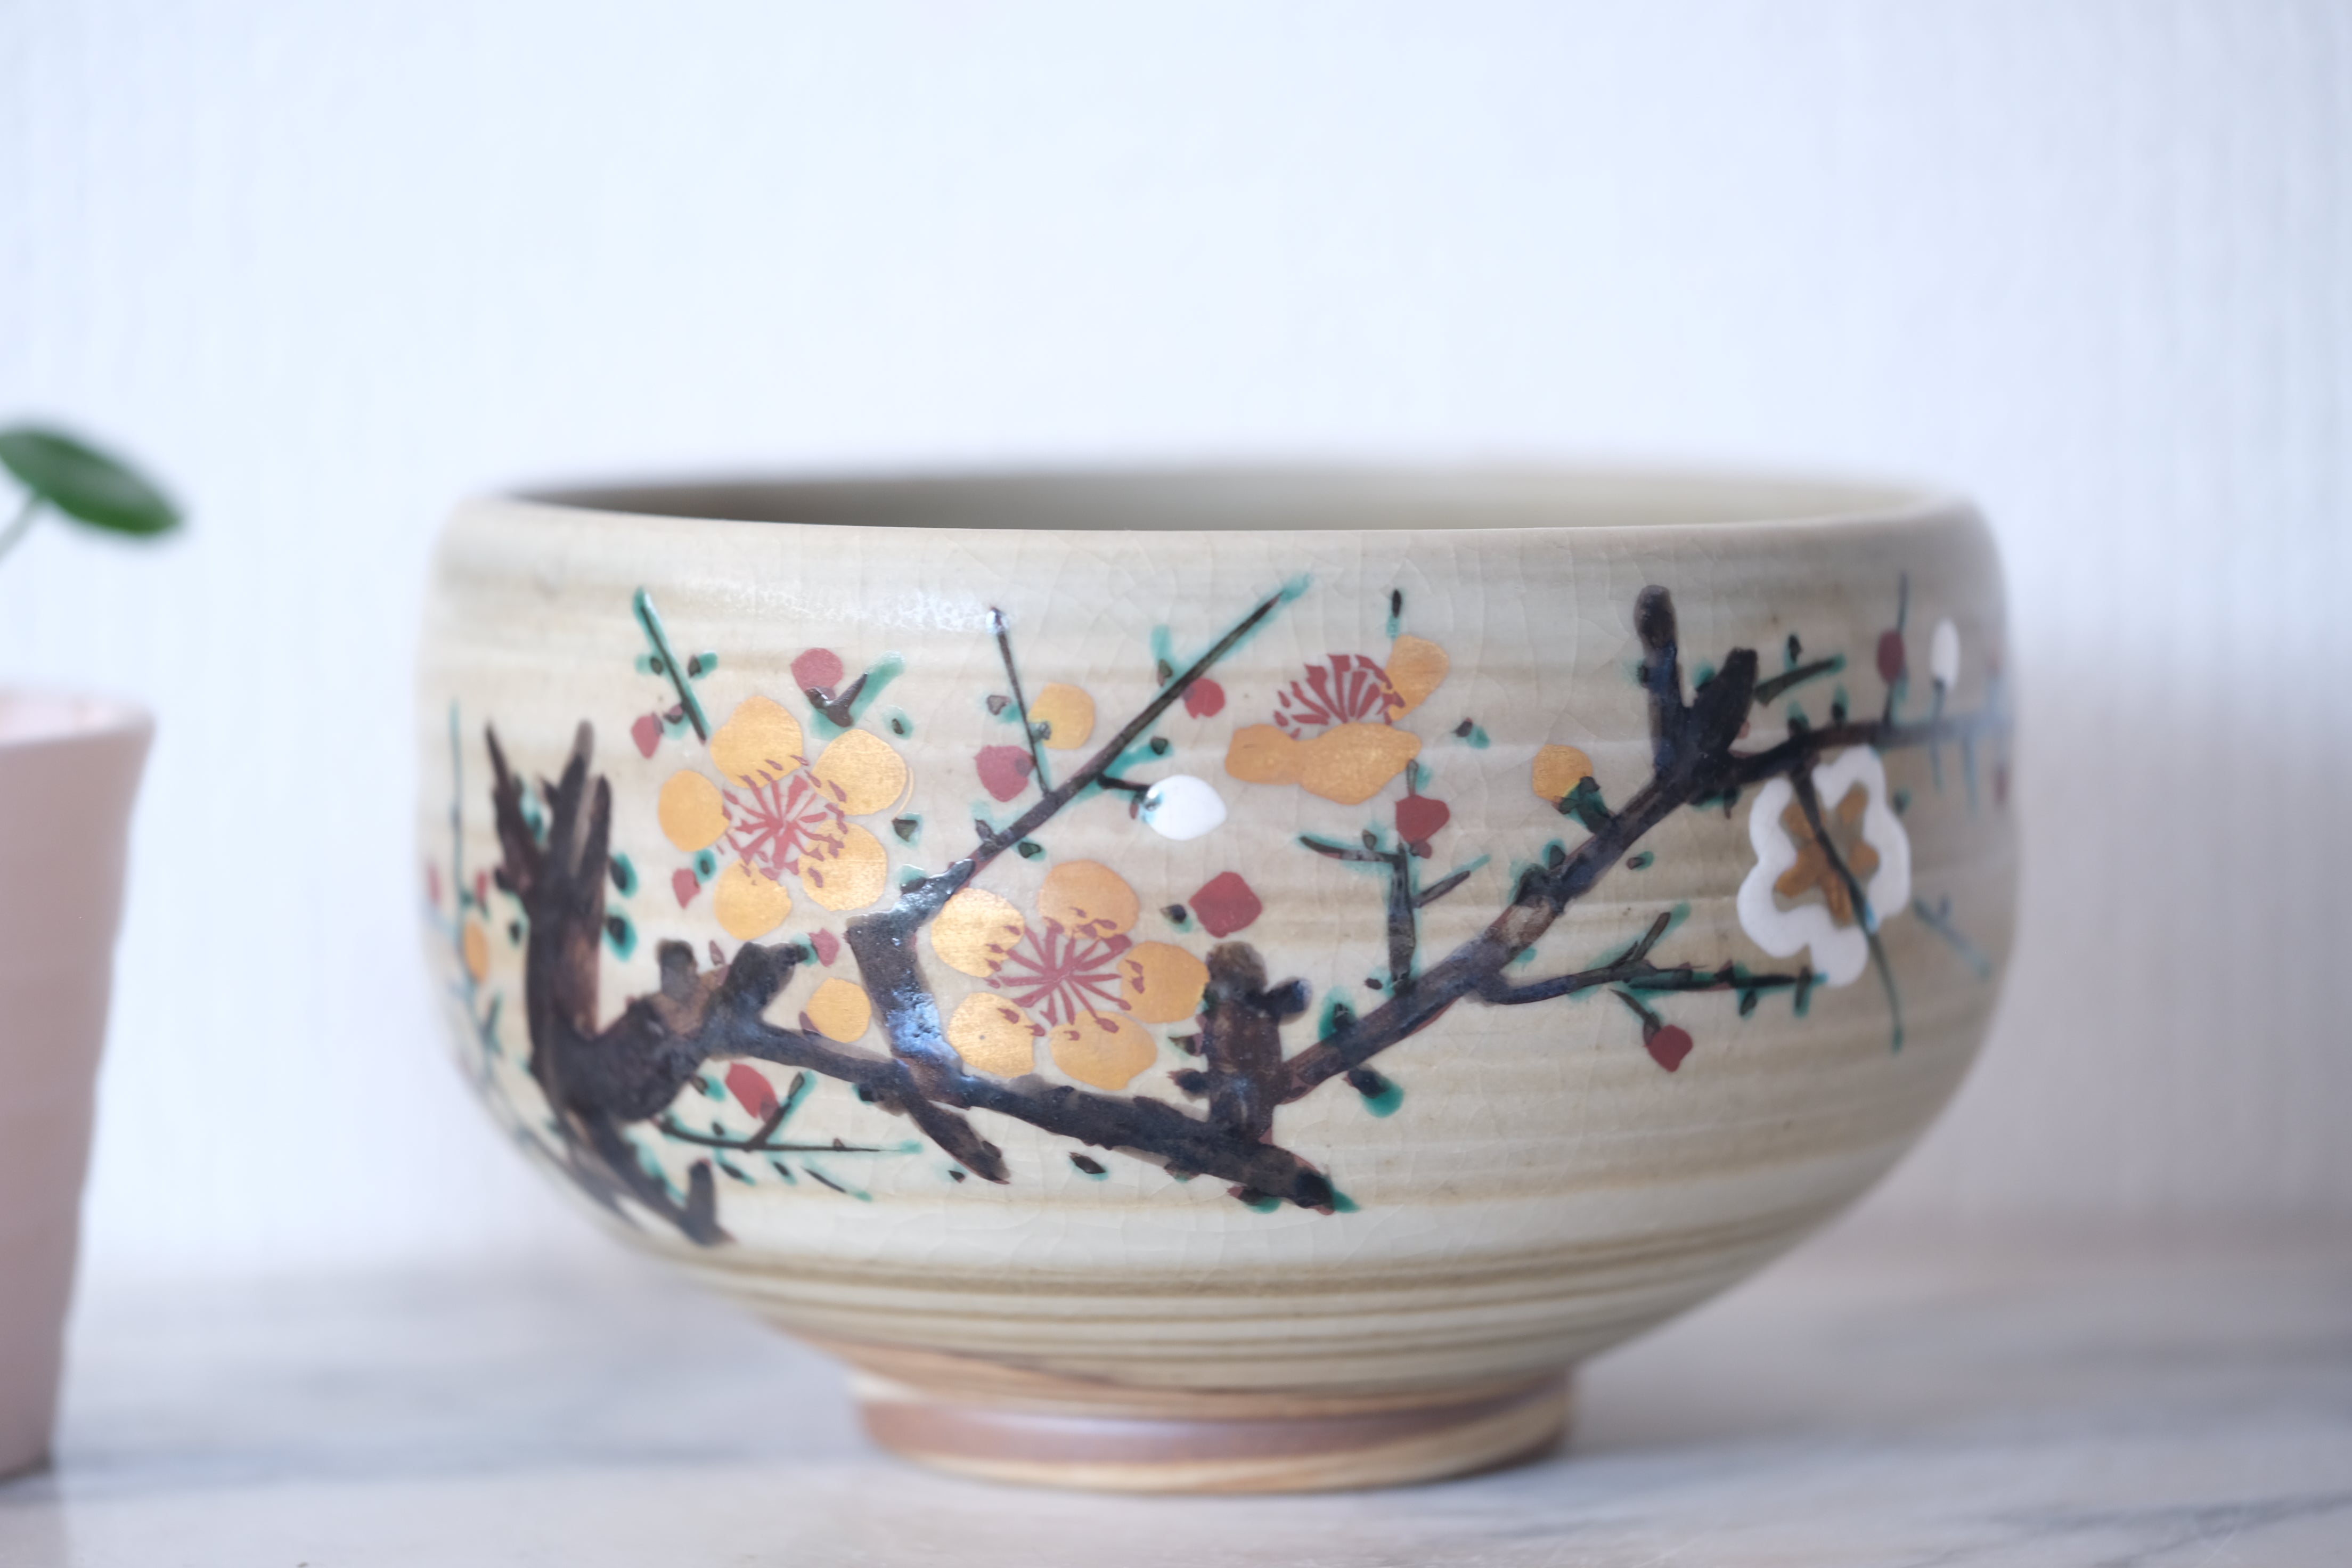 Japanese Ceramic Tea Bowl with Blossoms by Tera Toshiro 寺利郎 (1916-1989) | 8 cm